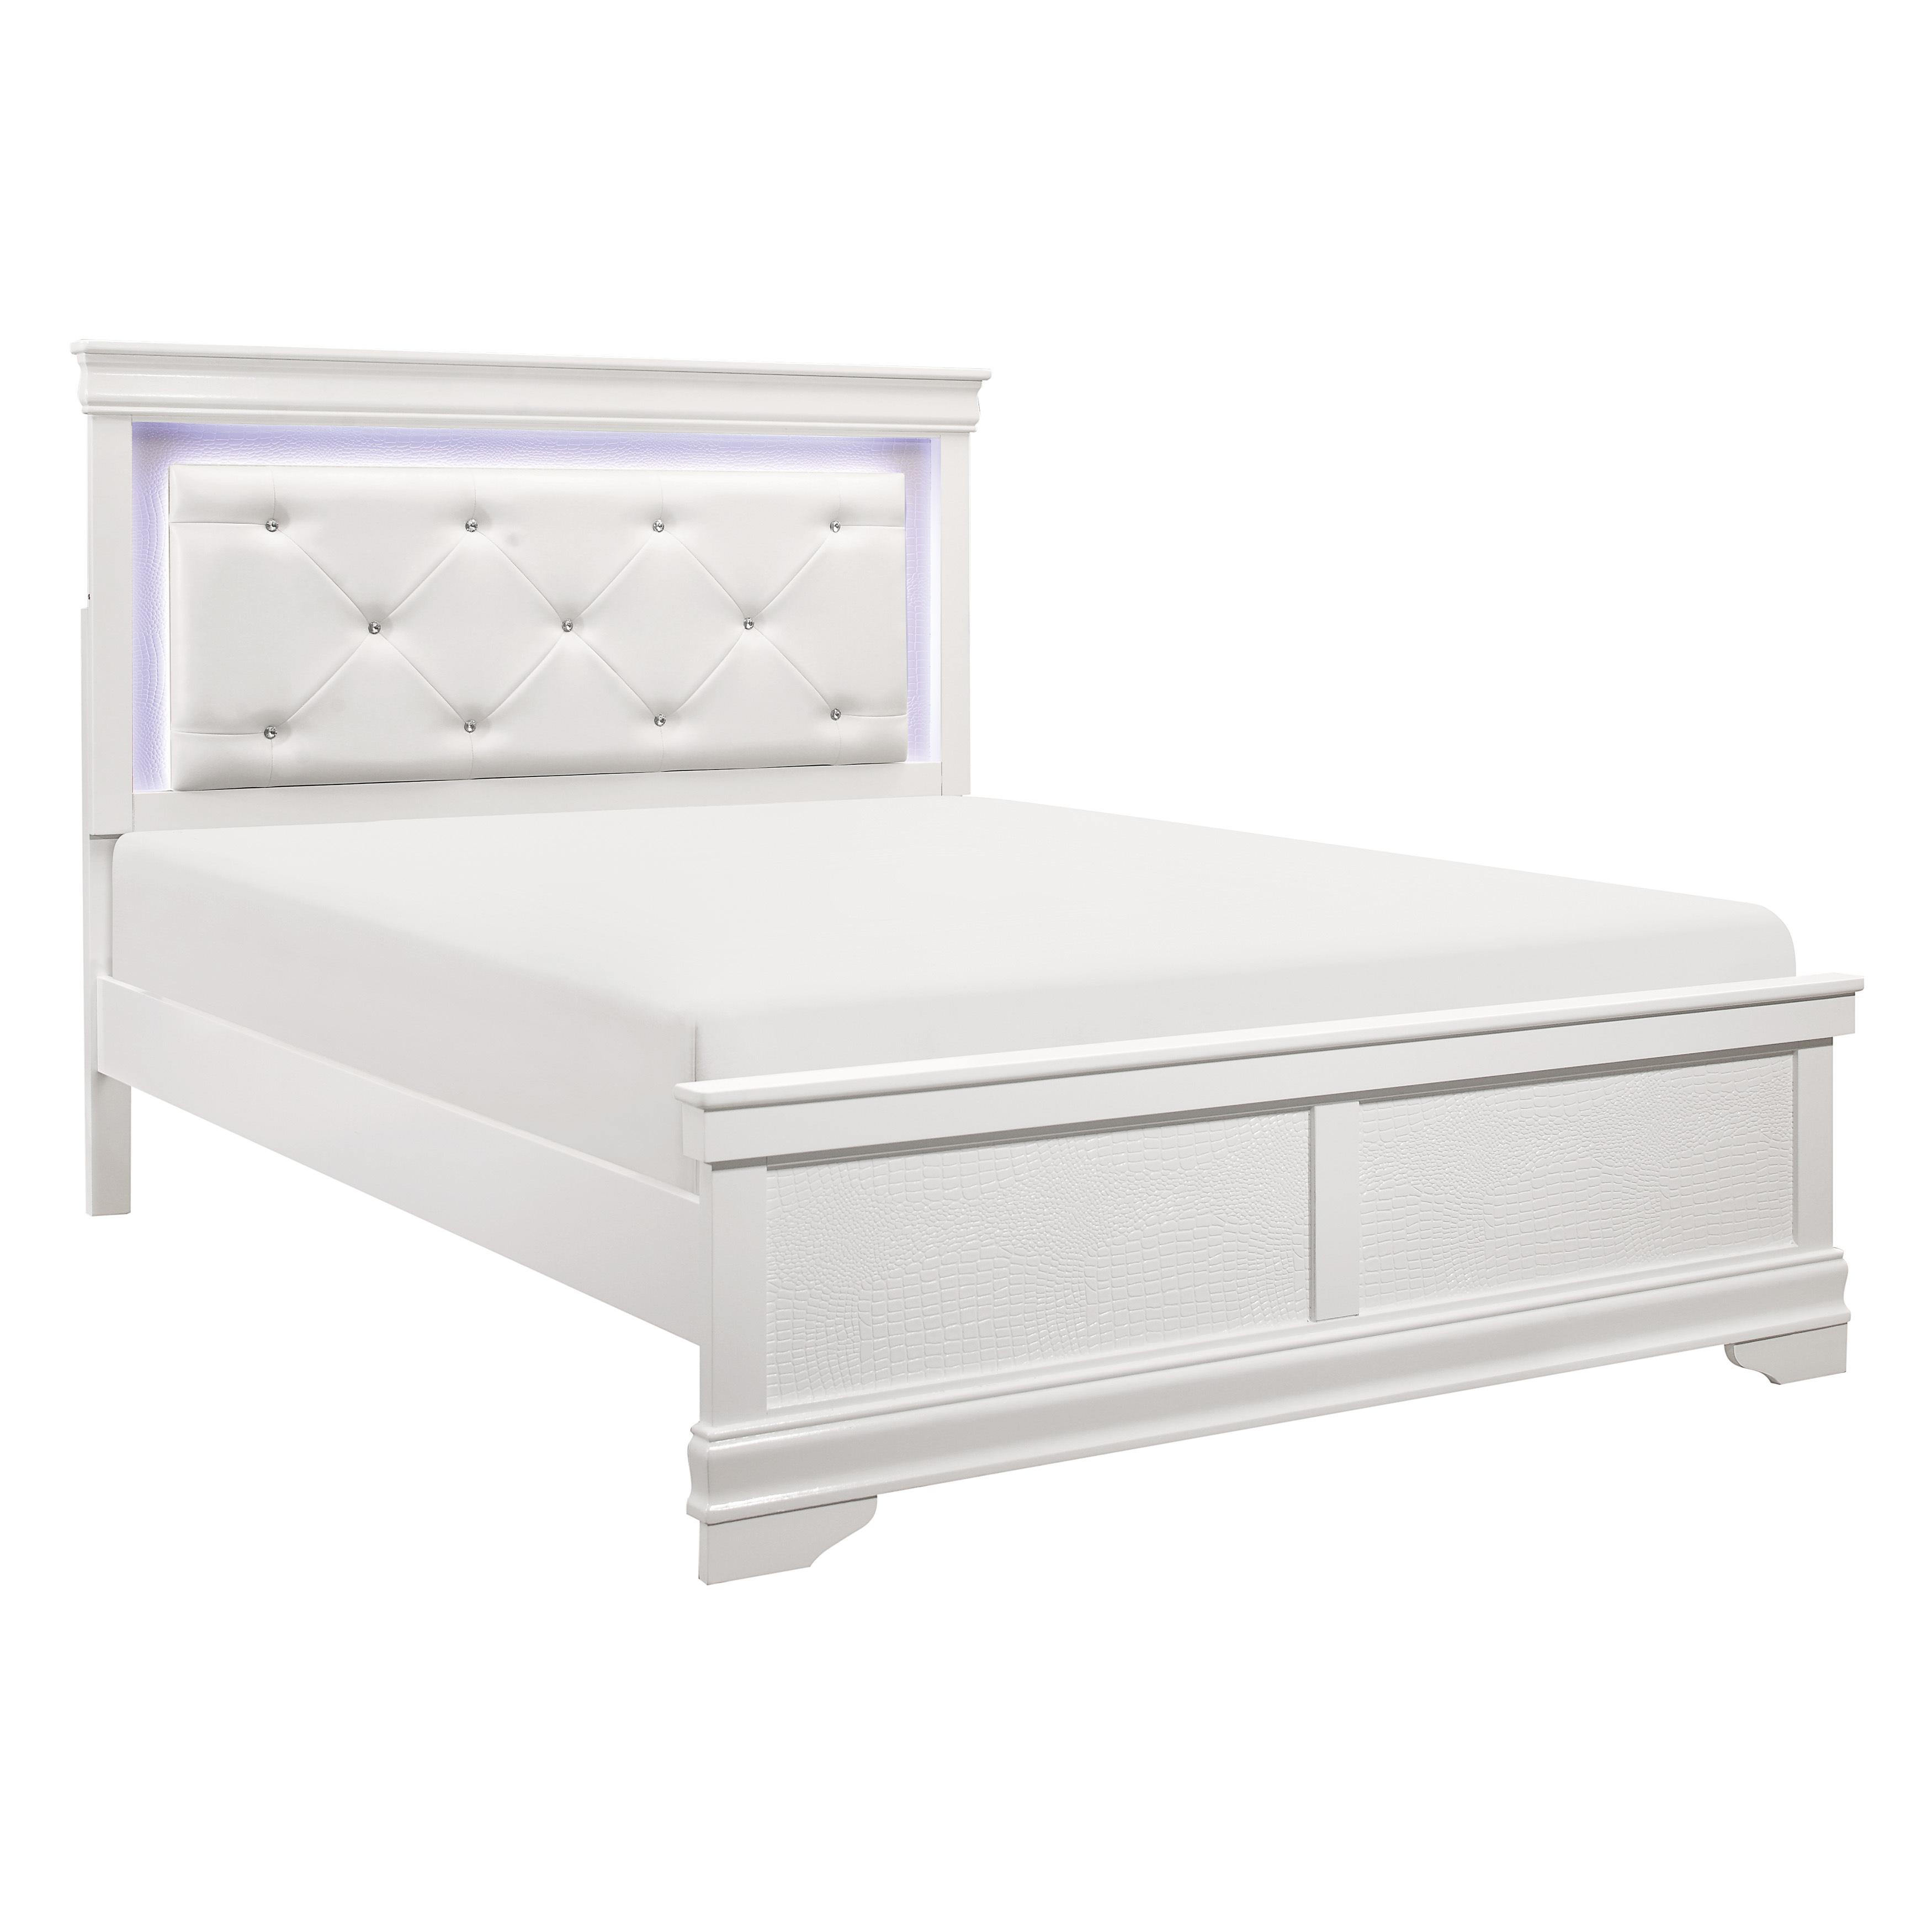 

    
Traditional White Wood CAL Bedroom Set 6pcs Homelegance 1556WK-1CK* Lana
